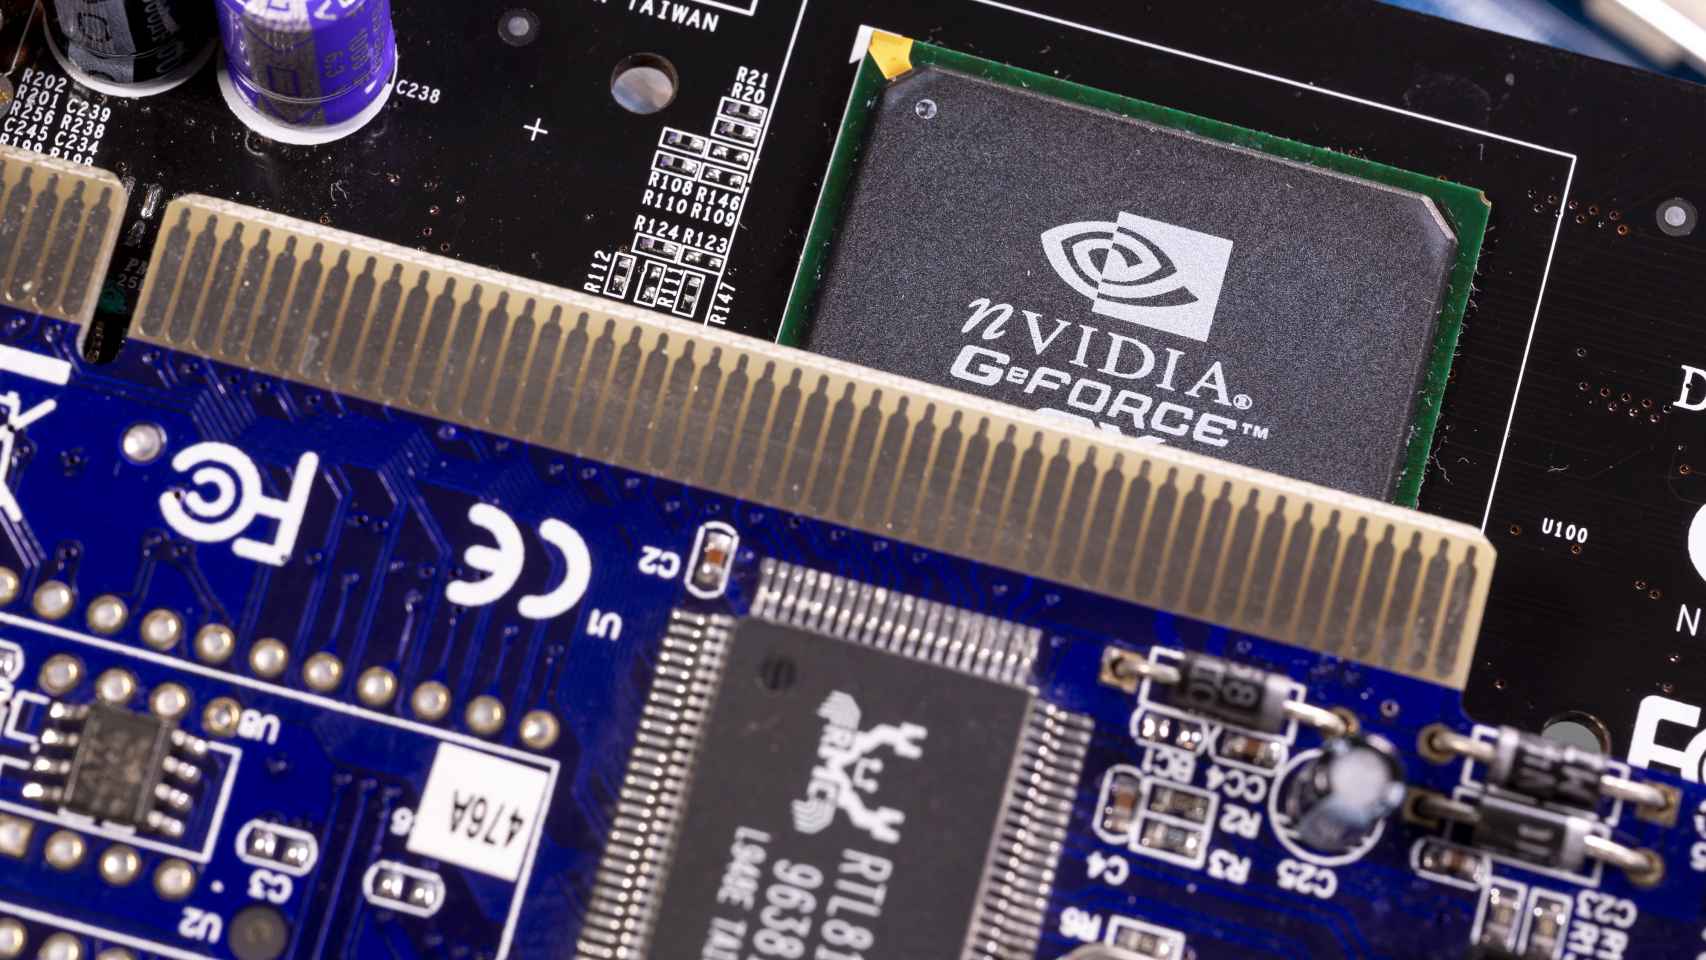 Chip Nvidia GeForce y circuito impreso del tablero PCB